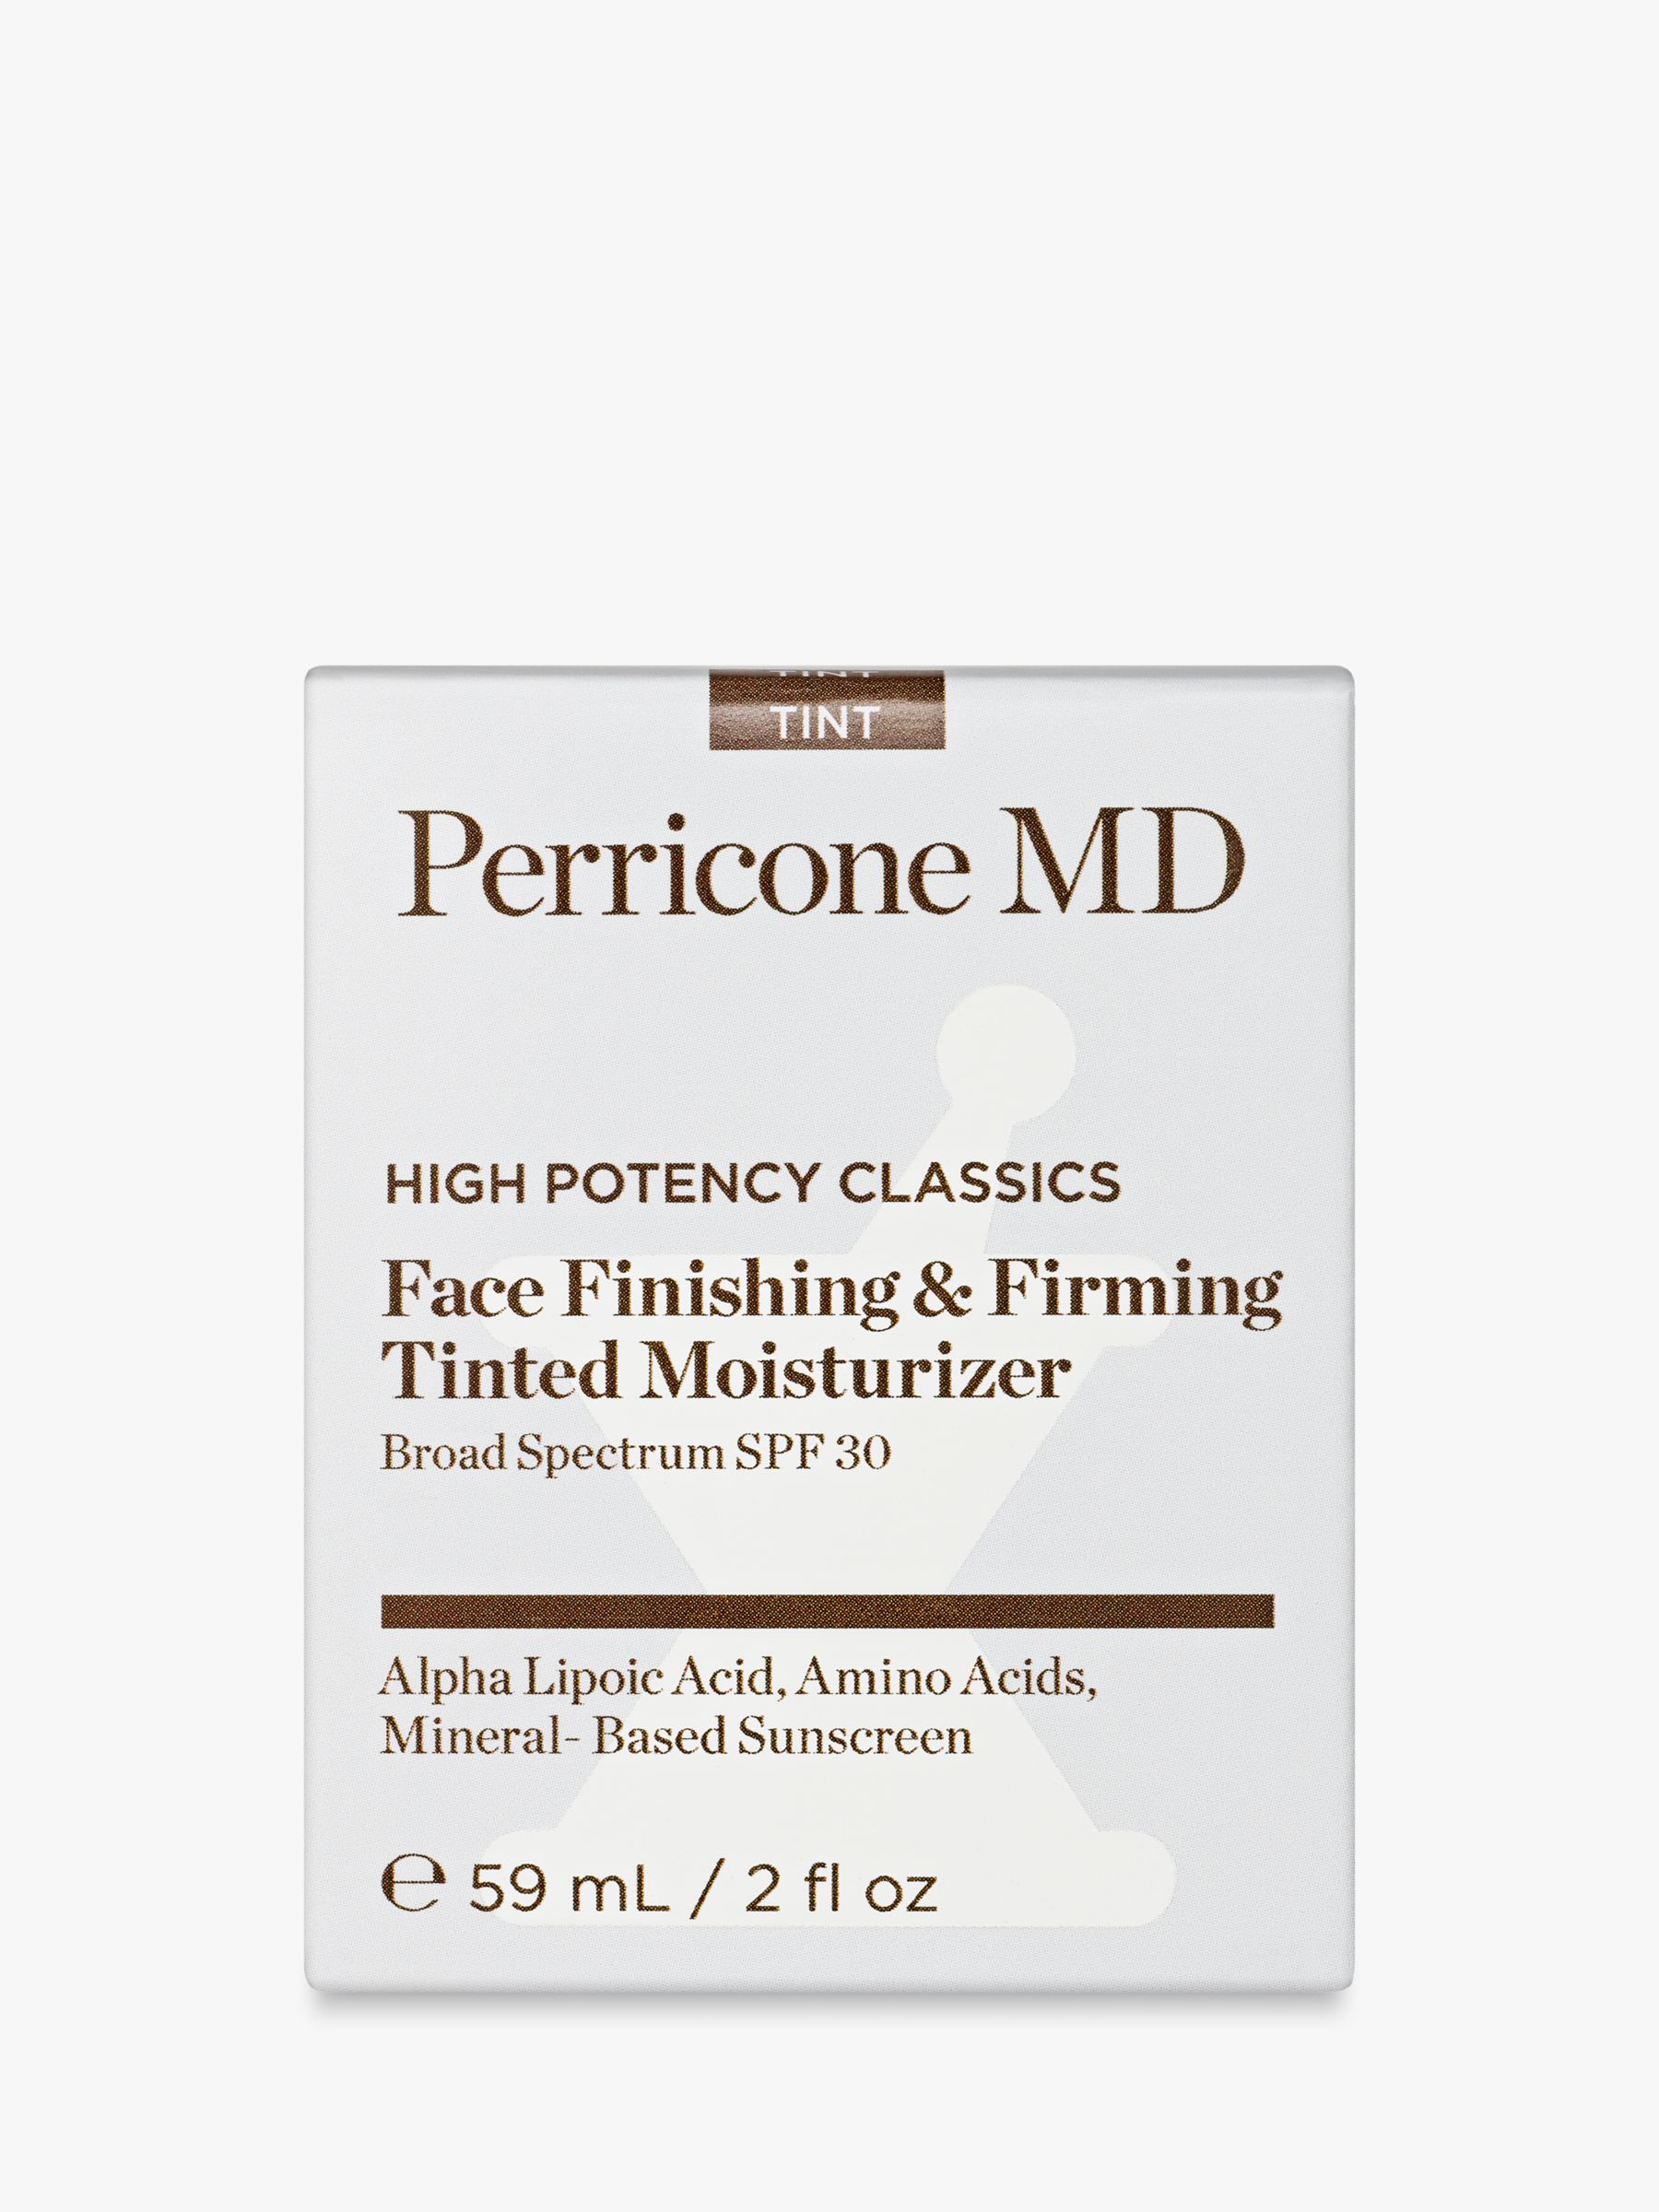 Perricone MD High Potency Classics Face Finishing & Firming Moisturiser Tint SPF 30, 59ml 2